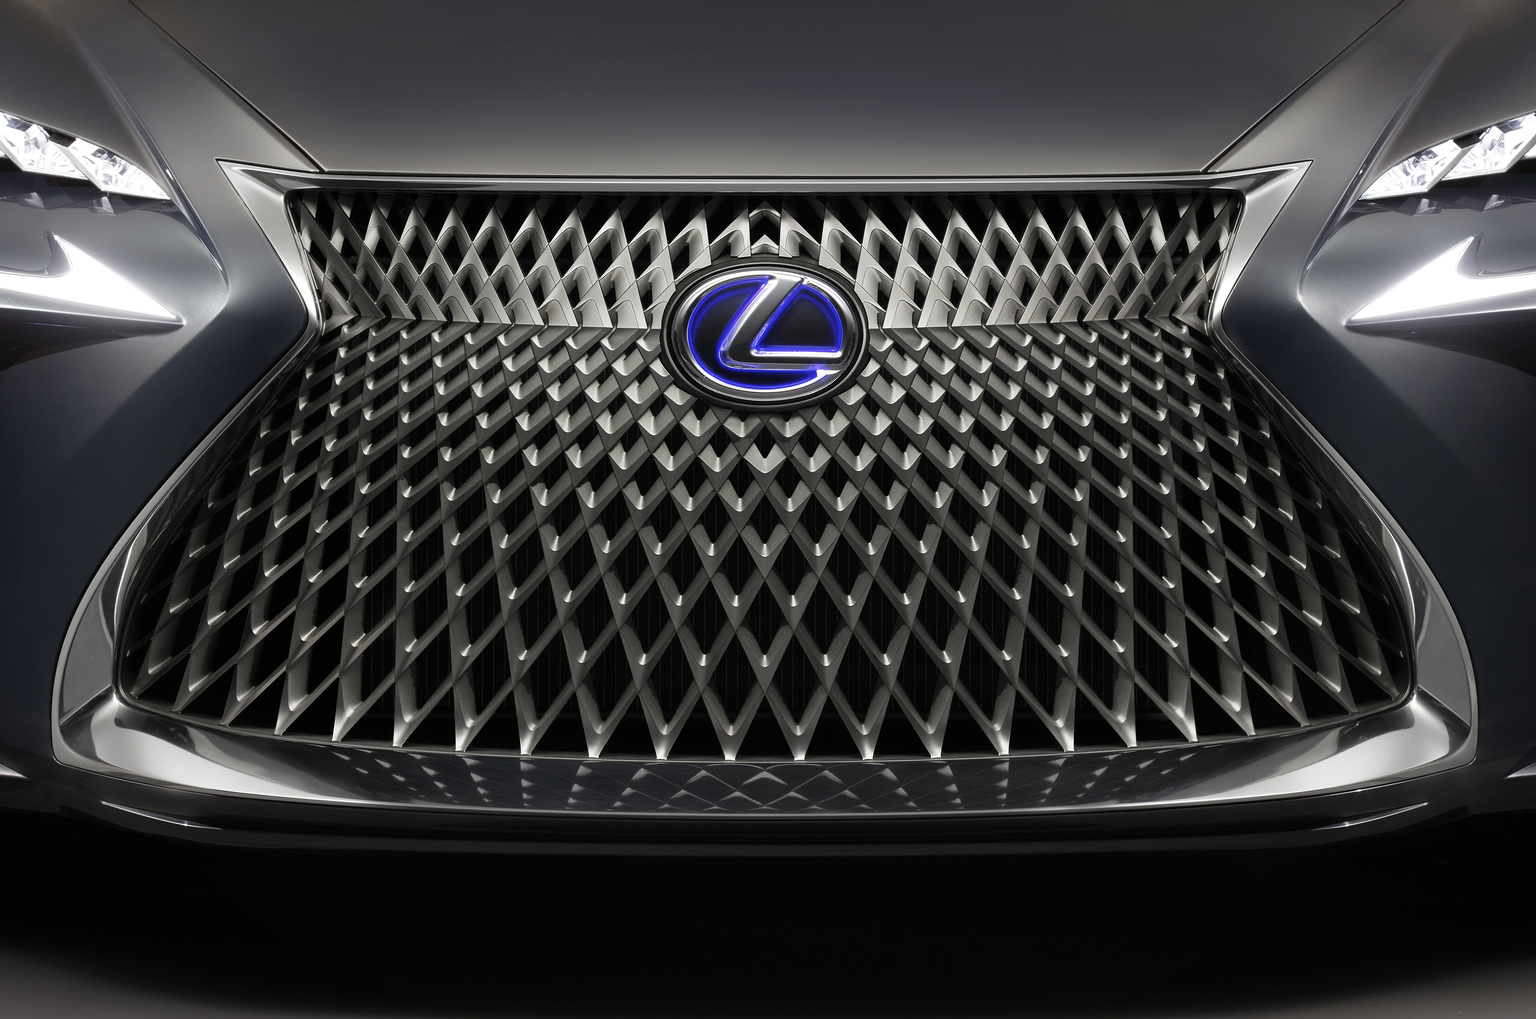 2015 Lexus LF-FC